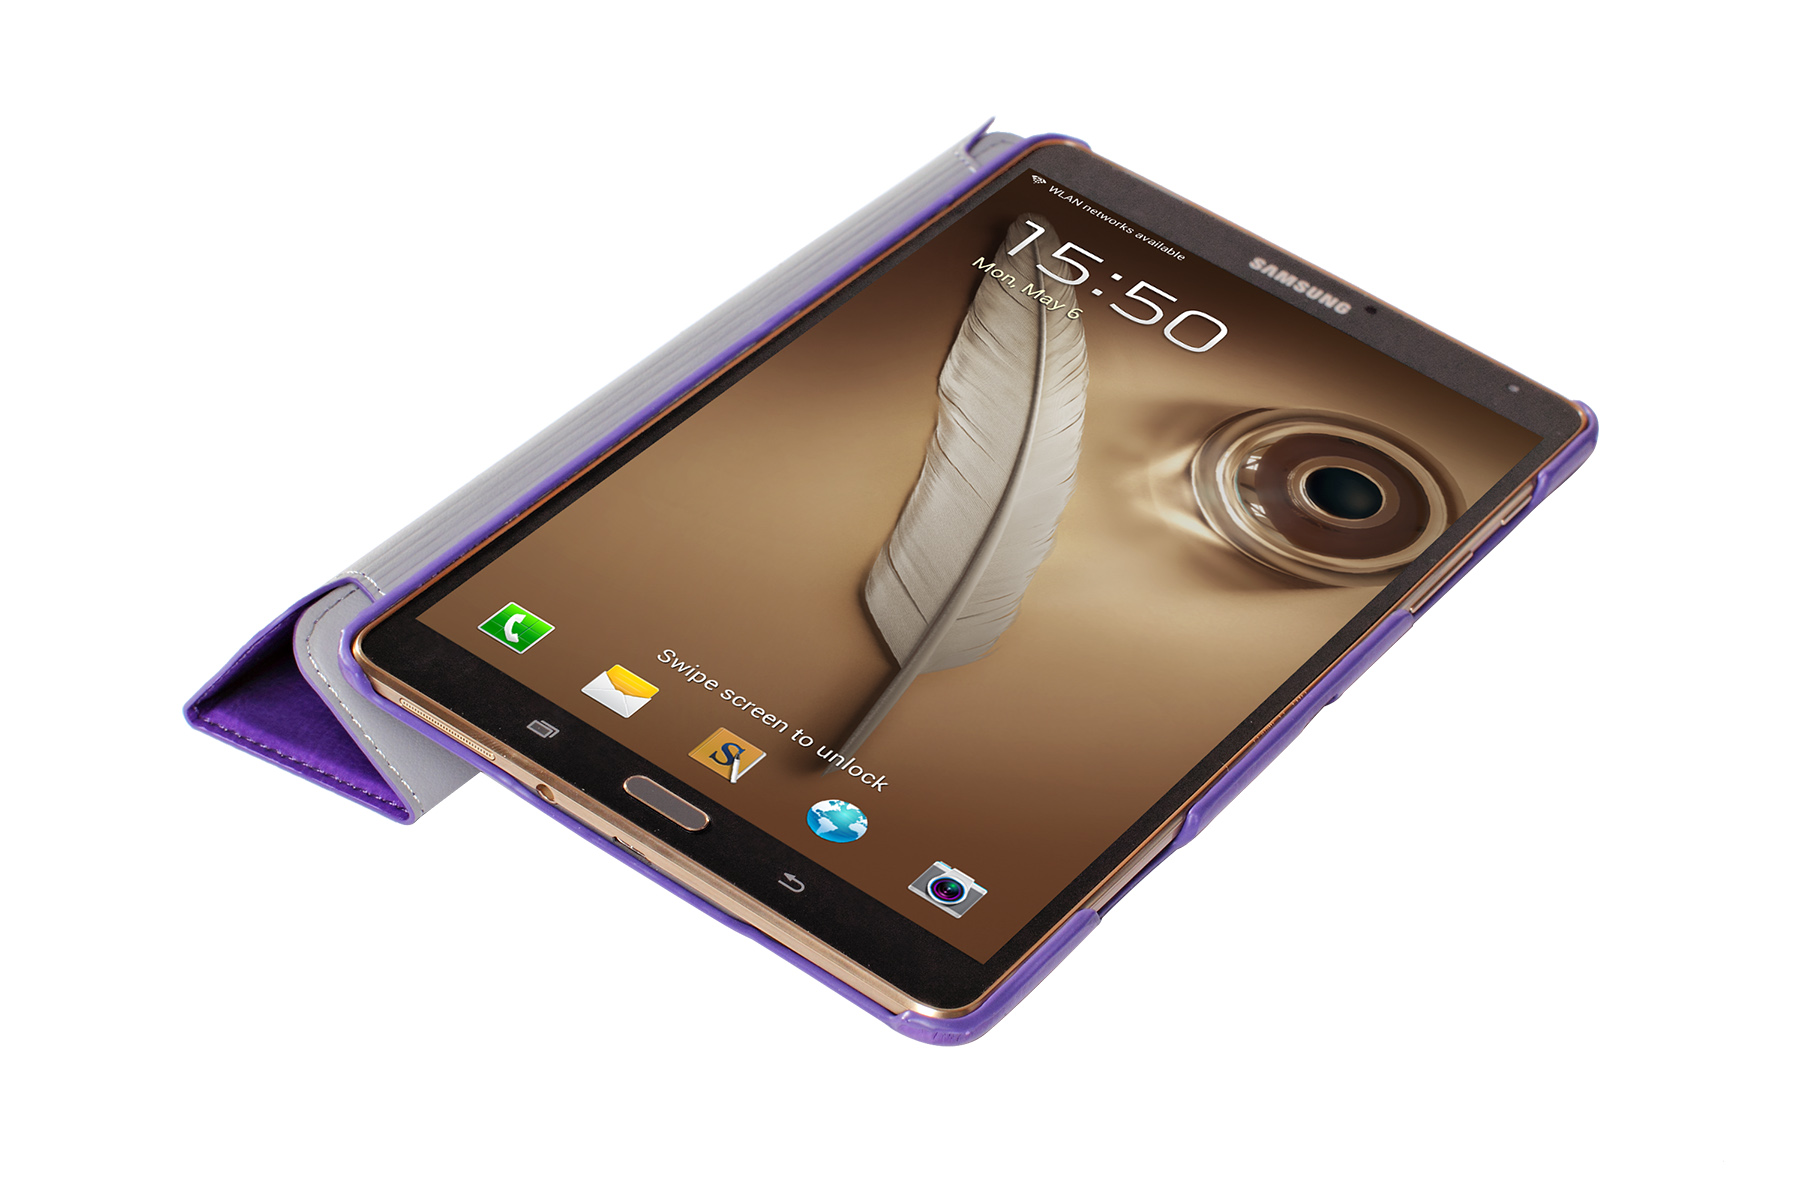 Чехол-книжка G-Case Slim Premium для Samsung Galaxy Tab S 8.4 Purple